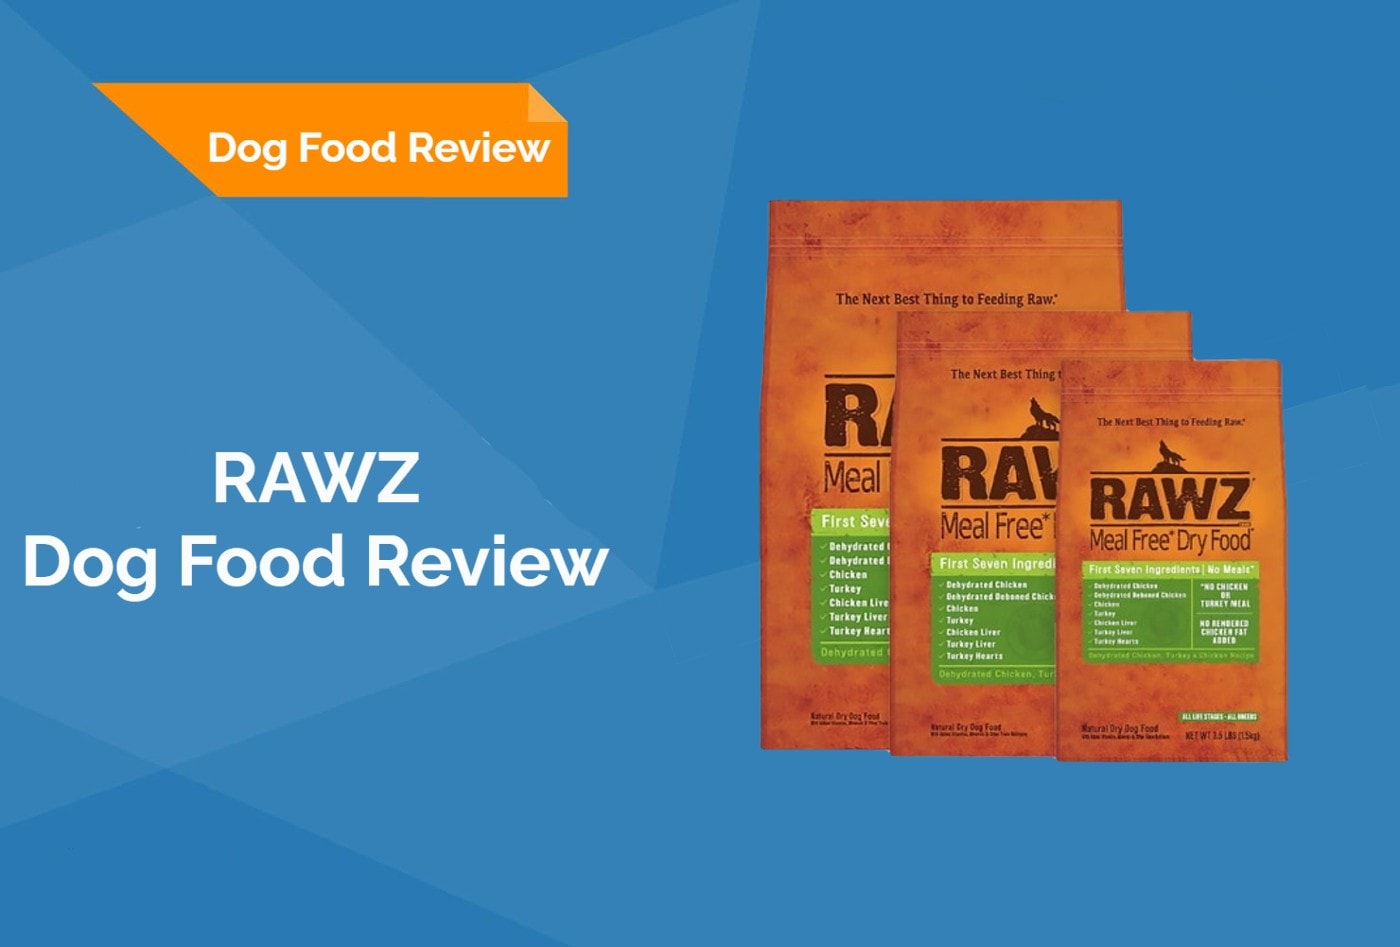 RAWZ Dog Food Review